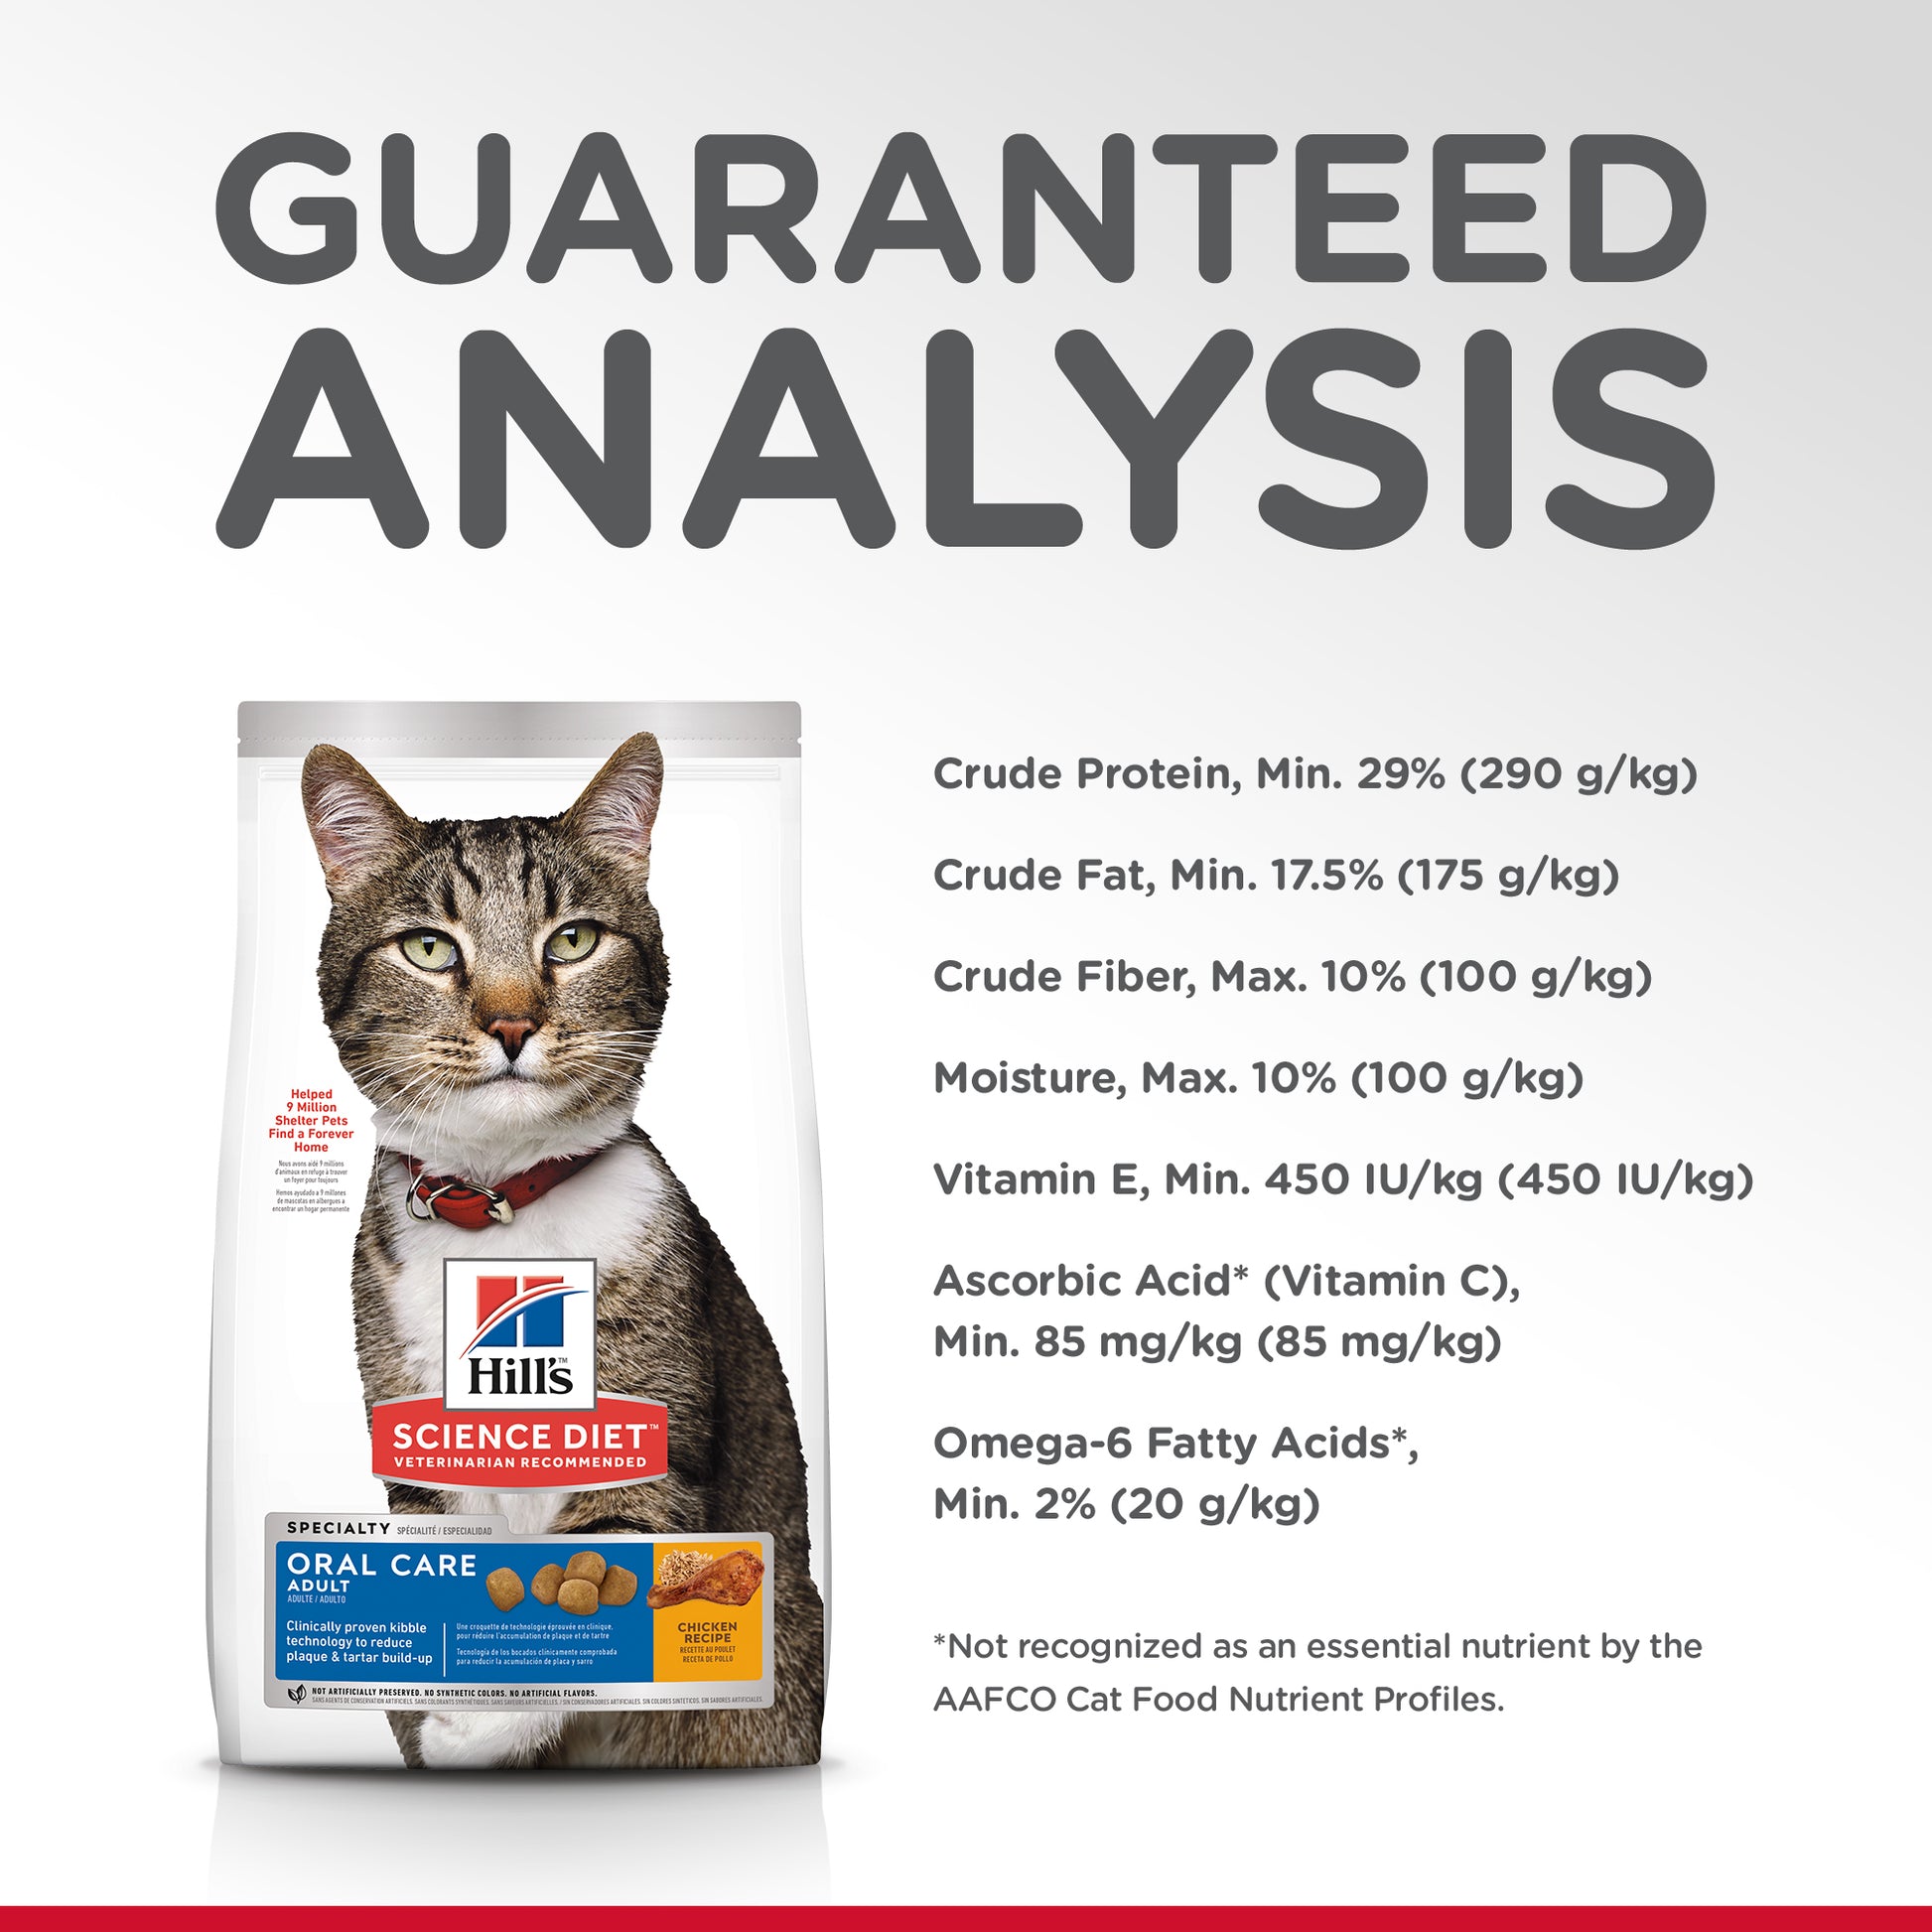 Hills Science Diet Adult Oral Care Dry Cat Food 4KG - ADS Pet Store